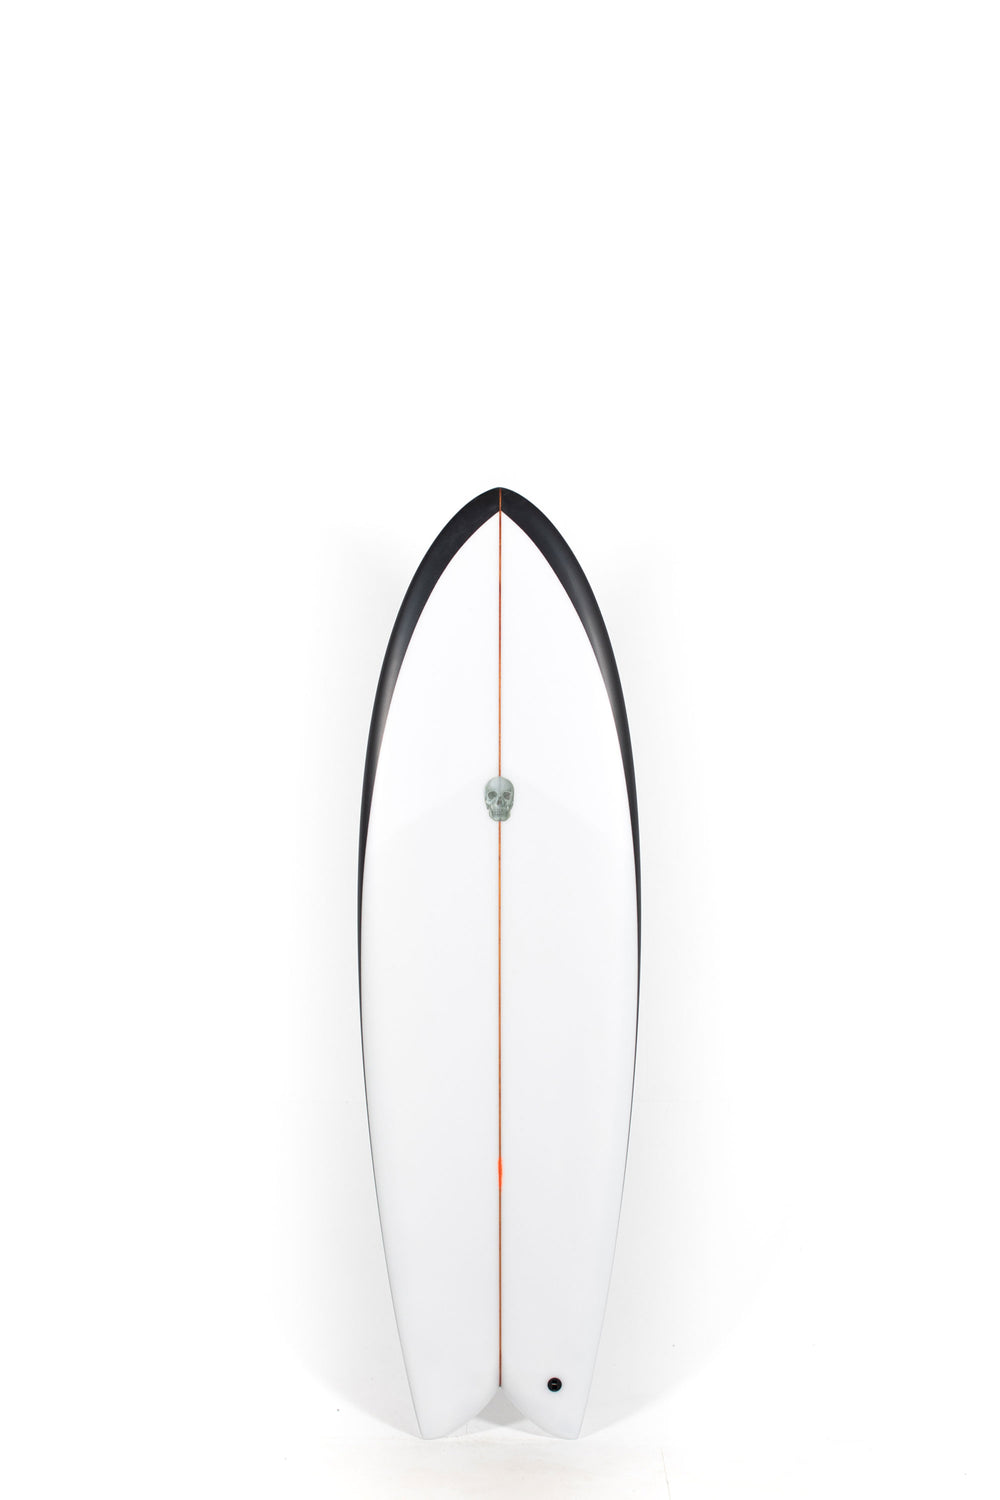 Pukas Surf Shop - Christenson Surfboards - MYCONAUT - 5'11